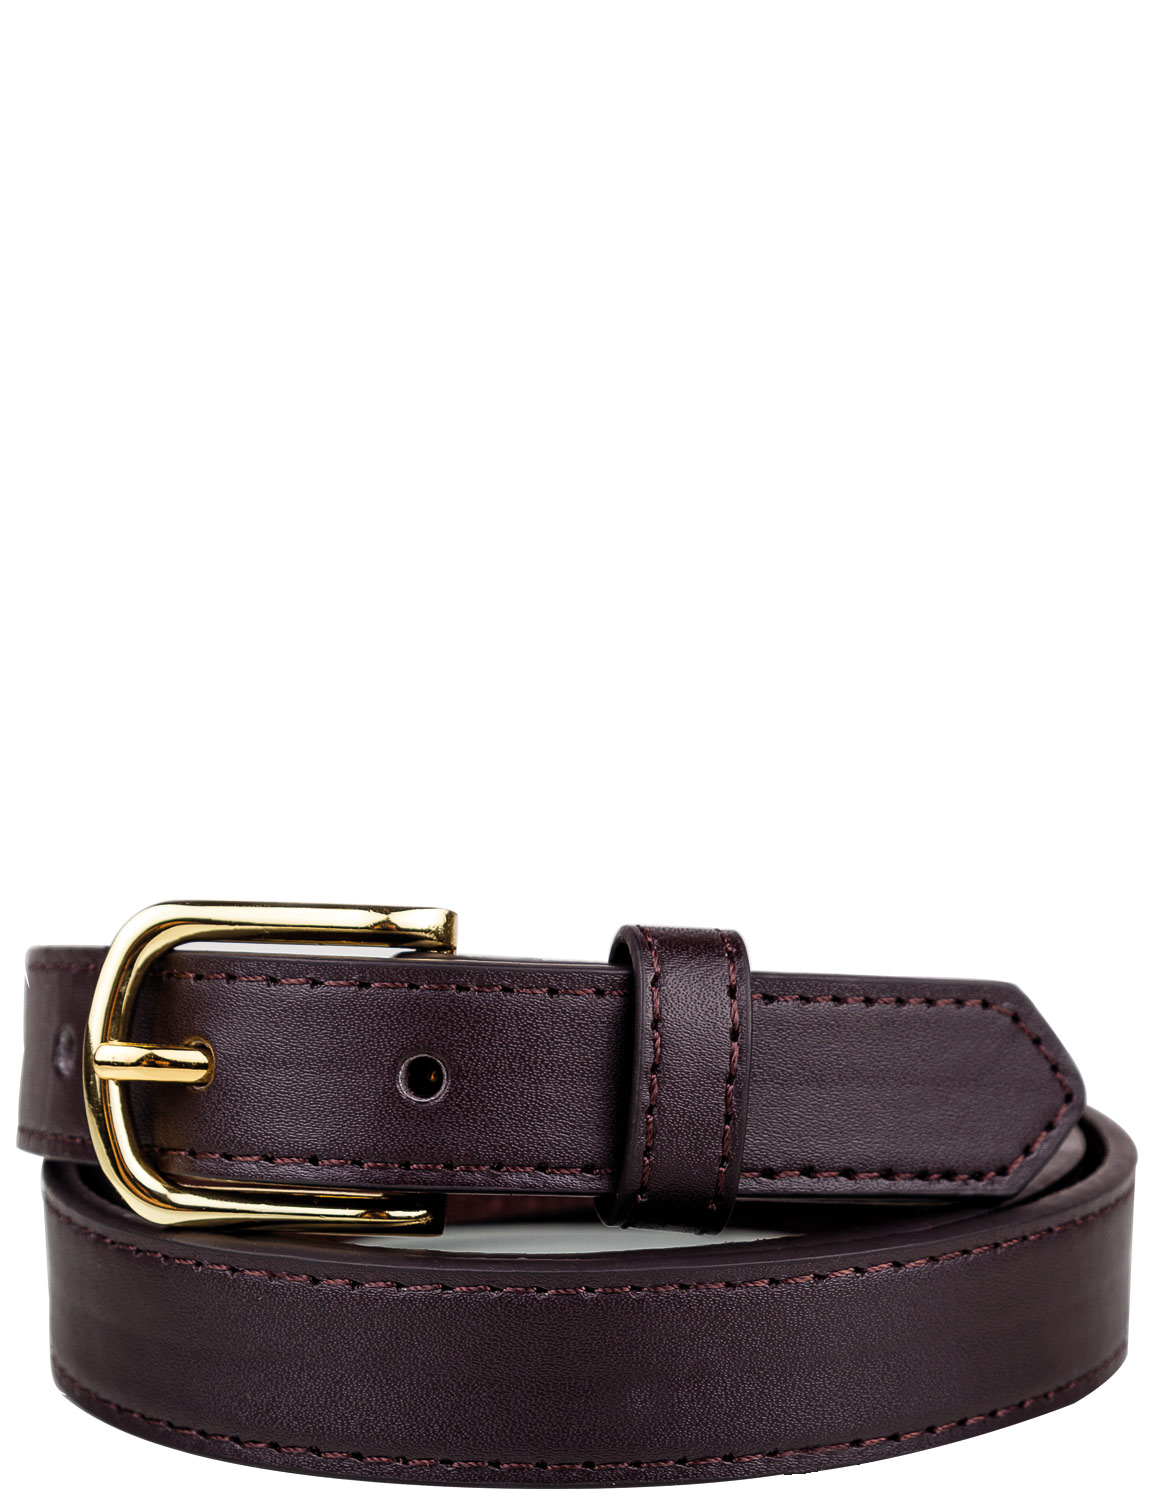 Mens 1 Inch Wide Leather Belt Black/Brown/Grey | eBay